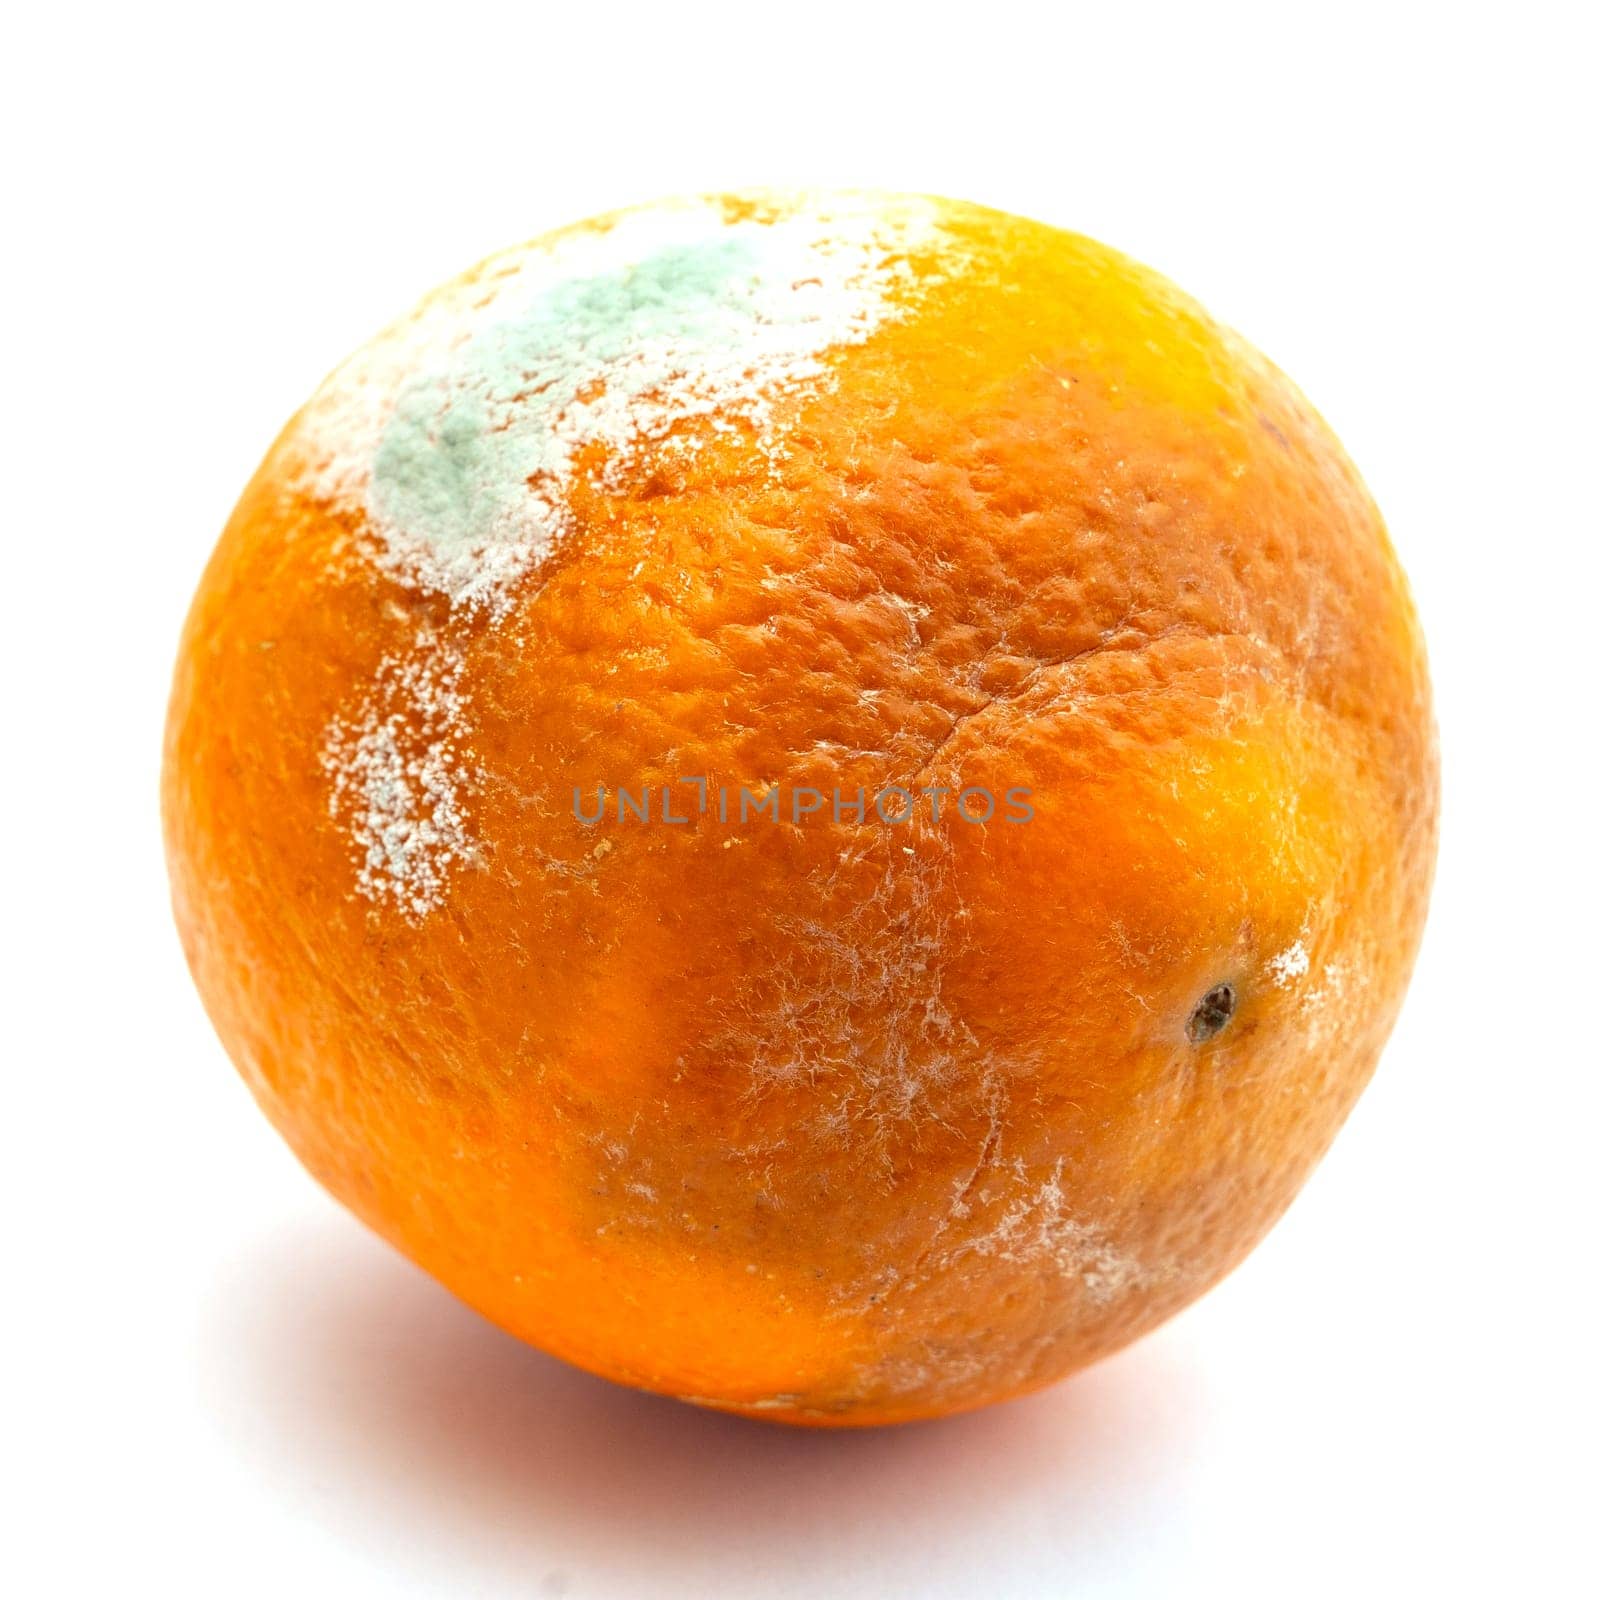 Orange orange covered with white mold by Serhii_Voroshchuk